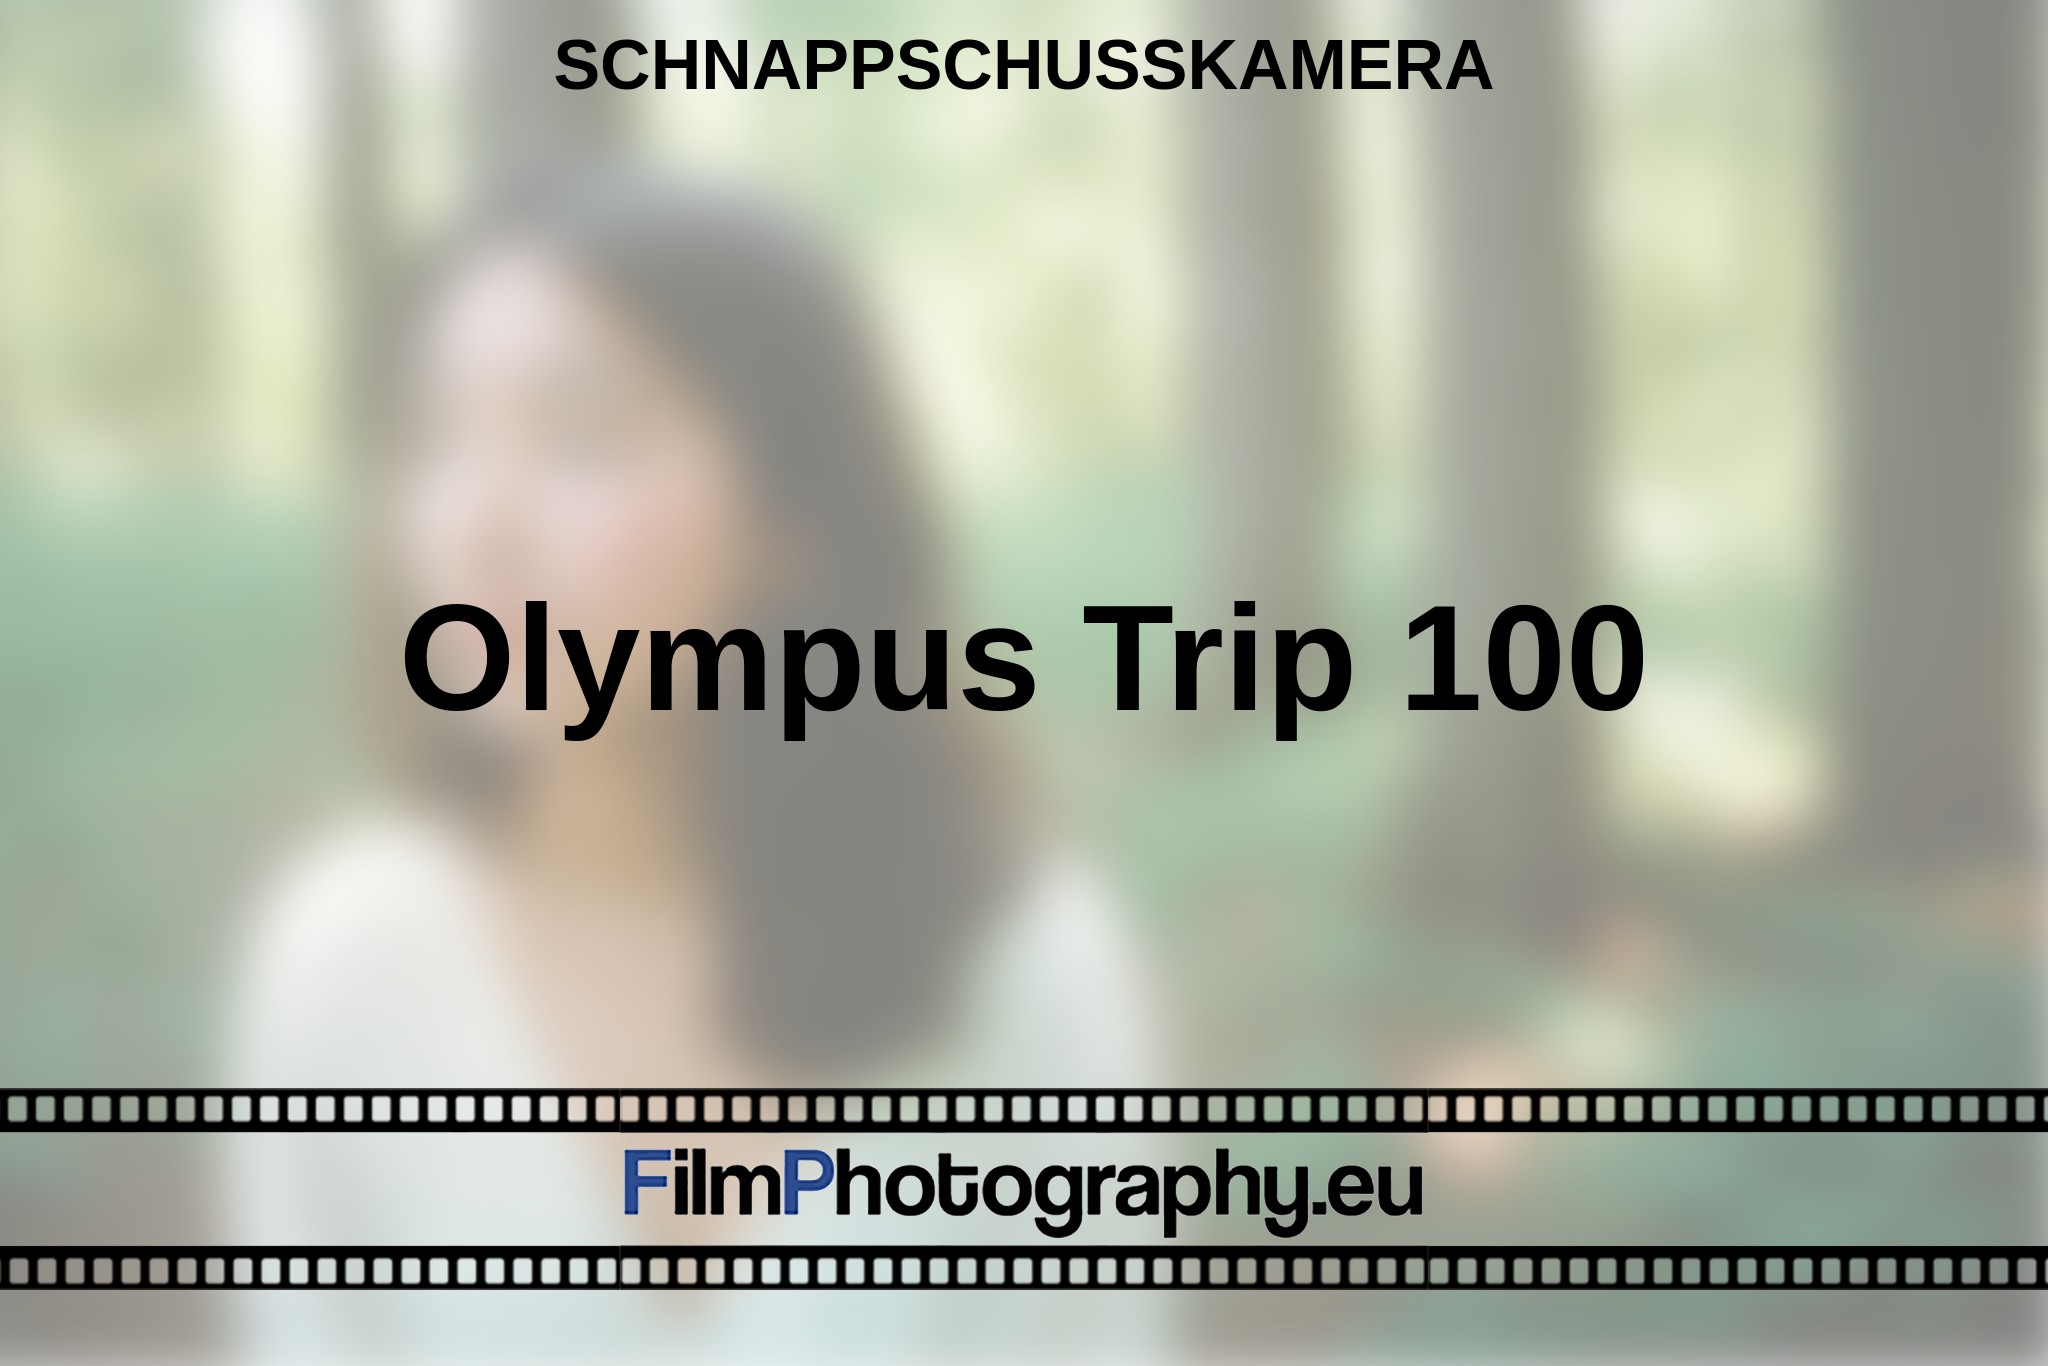 olympus-trip-100-schnappschusskamera-bnv.jpg